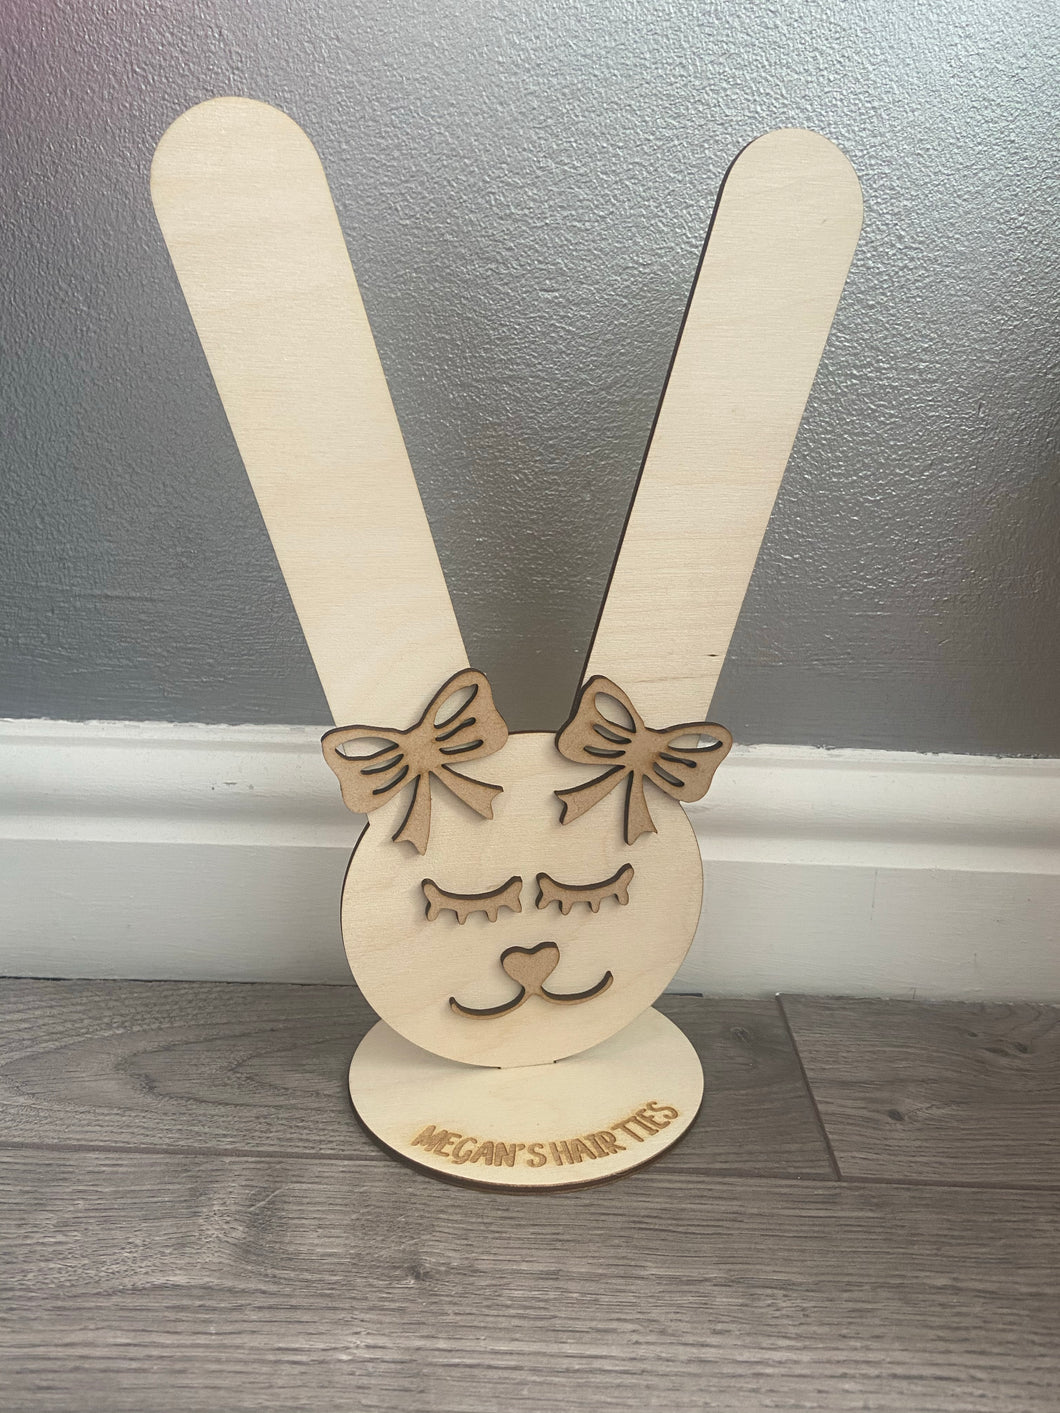 Personalised freestanding hair ties bunny stand/holder - Laser LLama Designs Ltd